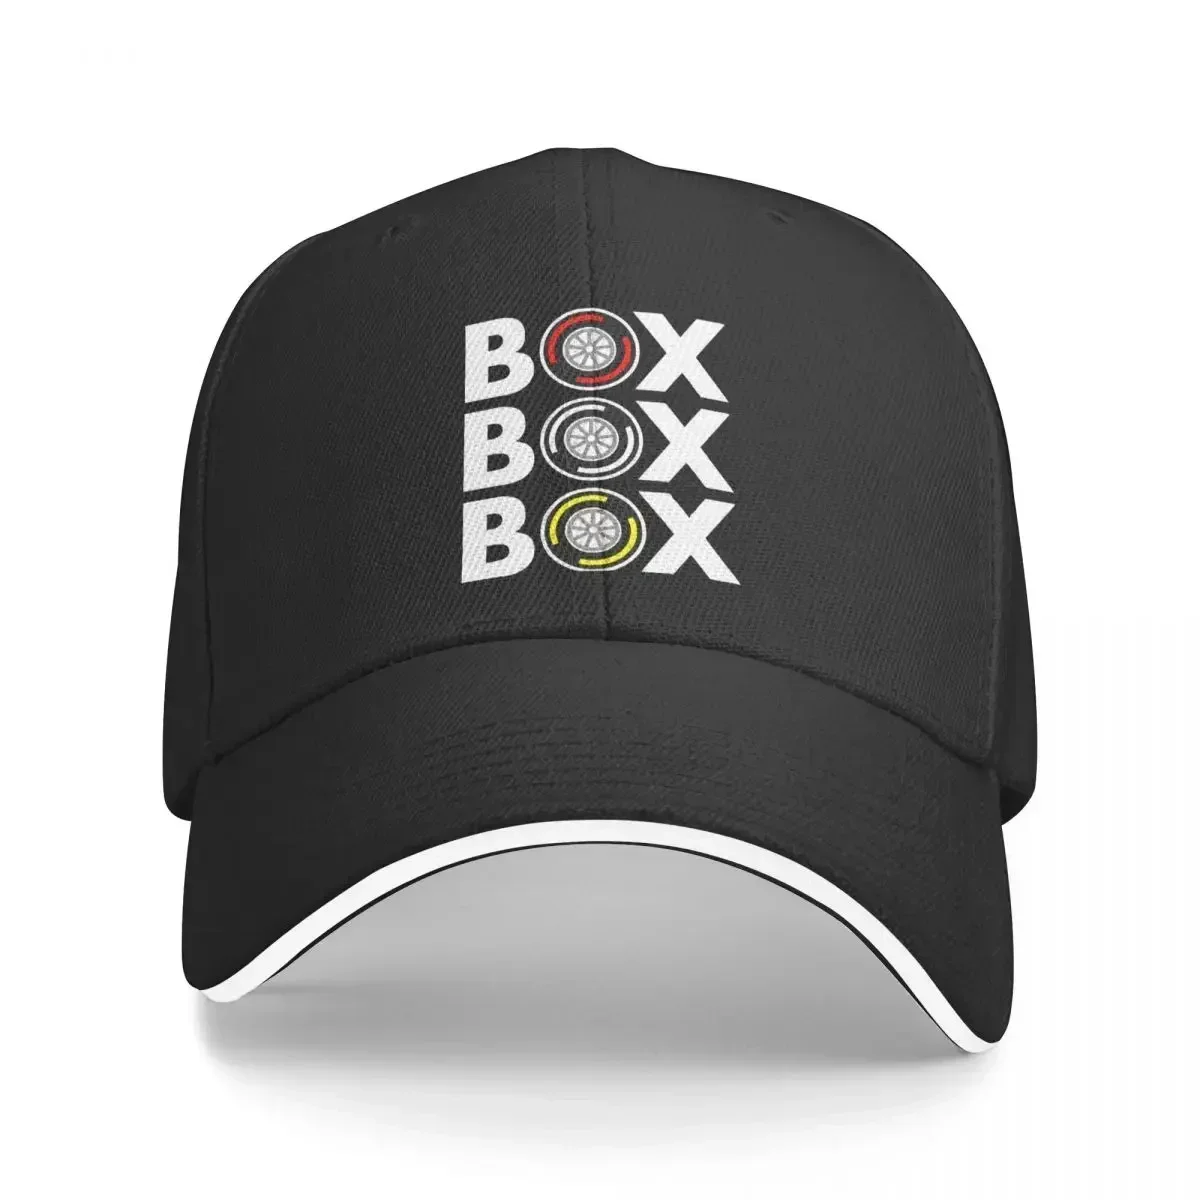 

Box Box Box Tyre White Text Design Car Racing Washed Men's Baseball Cap Sunprotection Trucker Snapback Caps Dad Hat Golf Hats